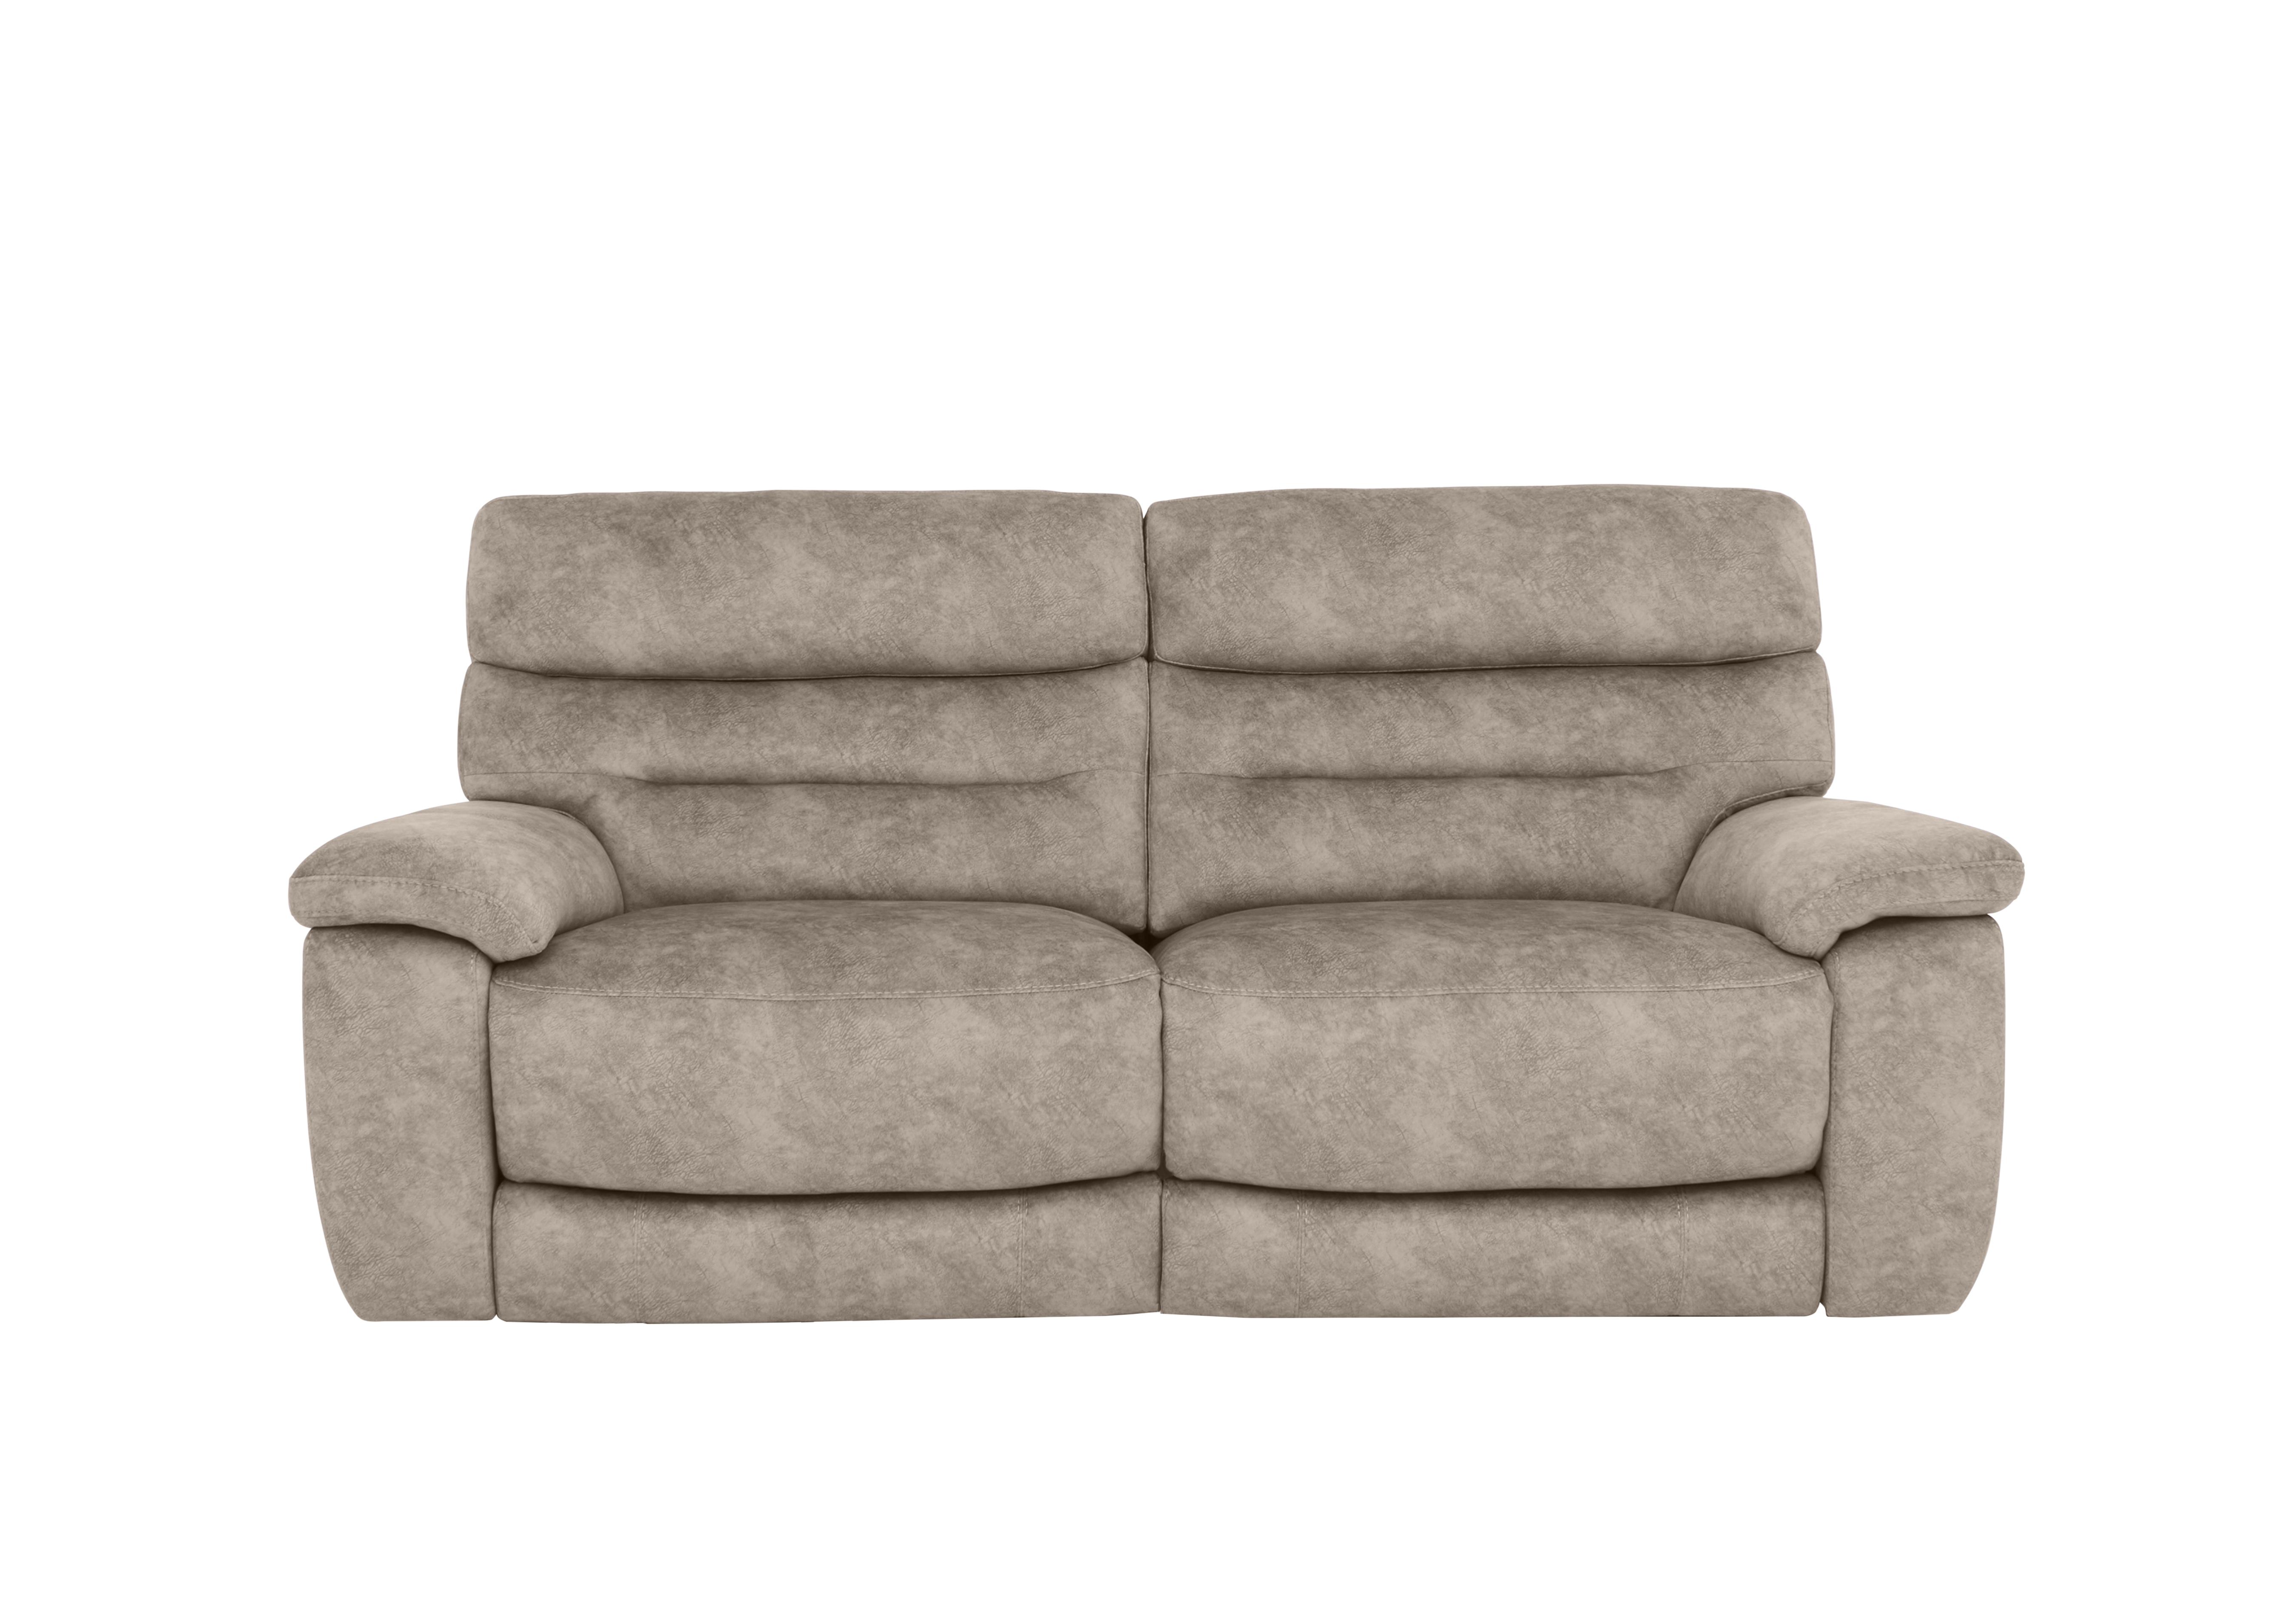 Nimbus 3 Seater Fabric Sofa in Bfa-Bnn-R29 Mink on Furniture Village